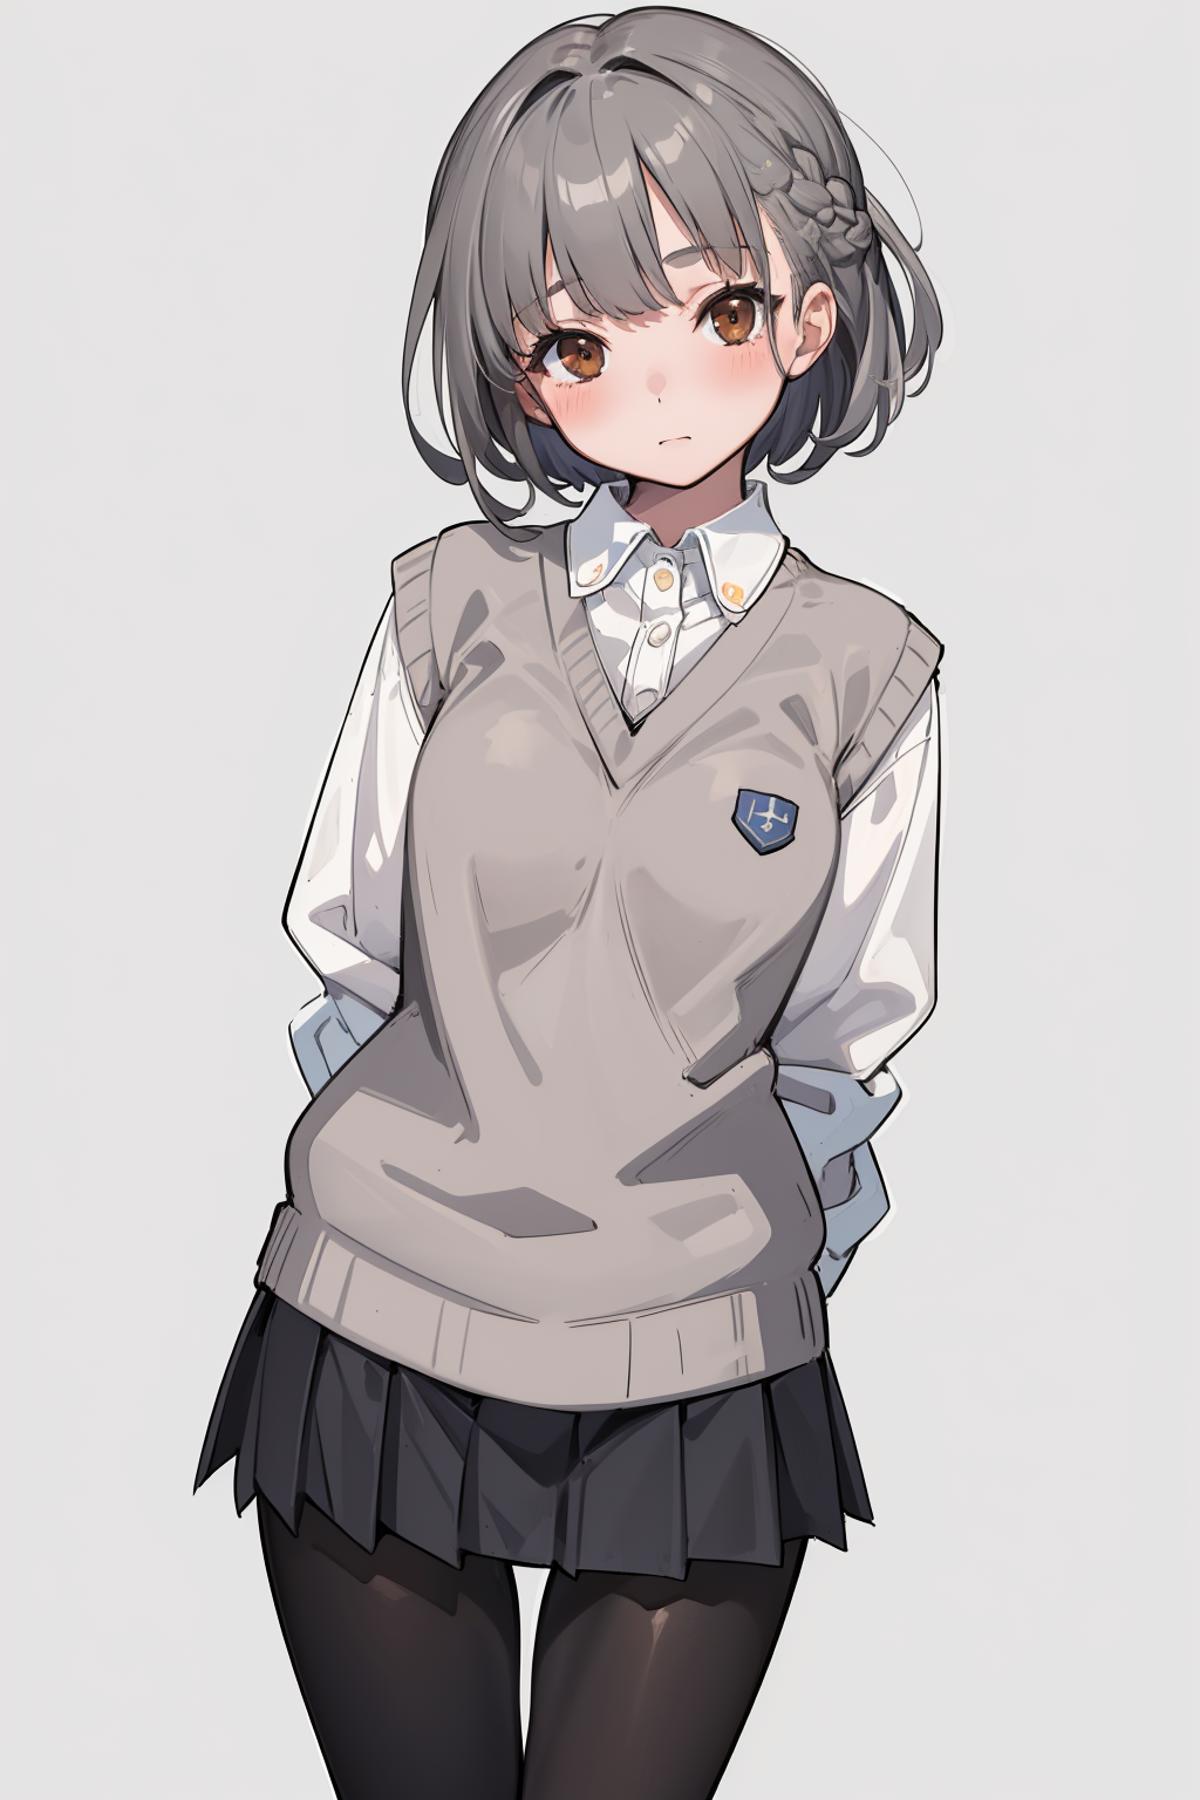 School uniform (Sweater vest) image by hivision